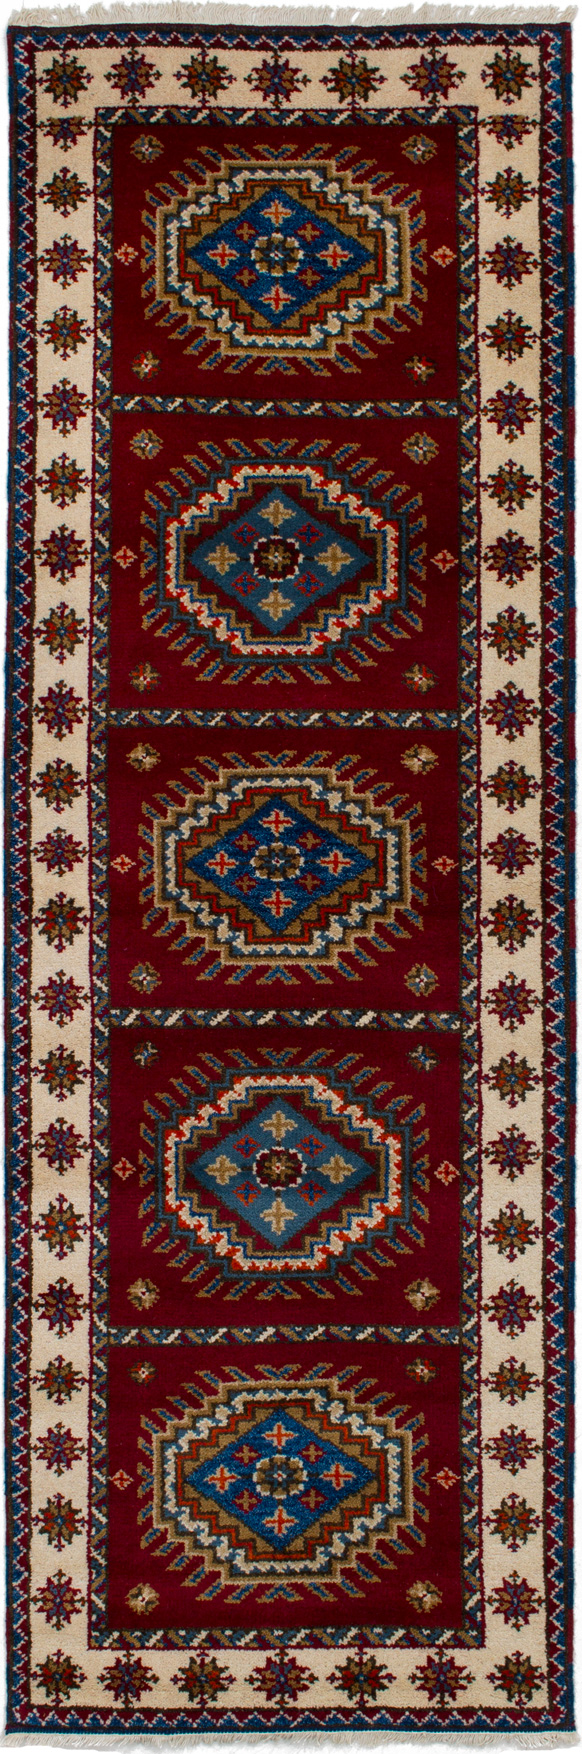 Hand-knotted Royal Kazak Dark Red Wool Rug 2'9" x 8'5"  Size: 2'9" x 8'5"  